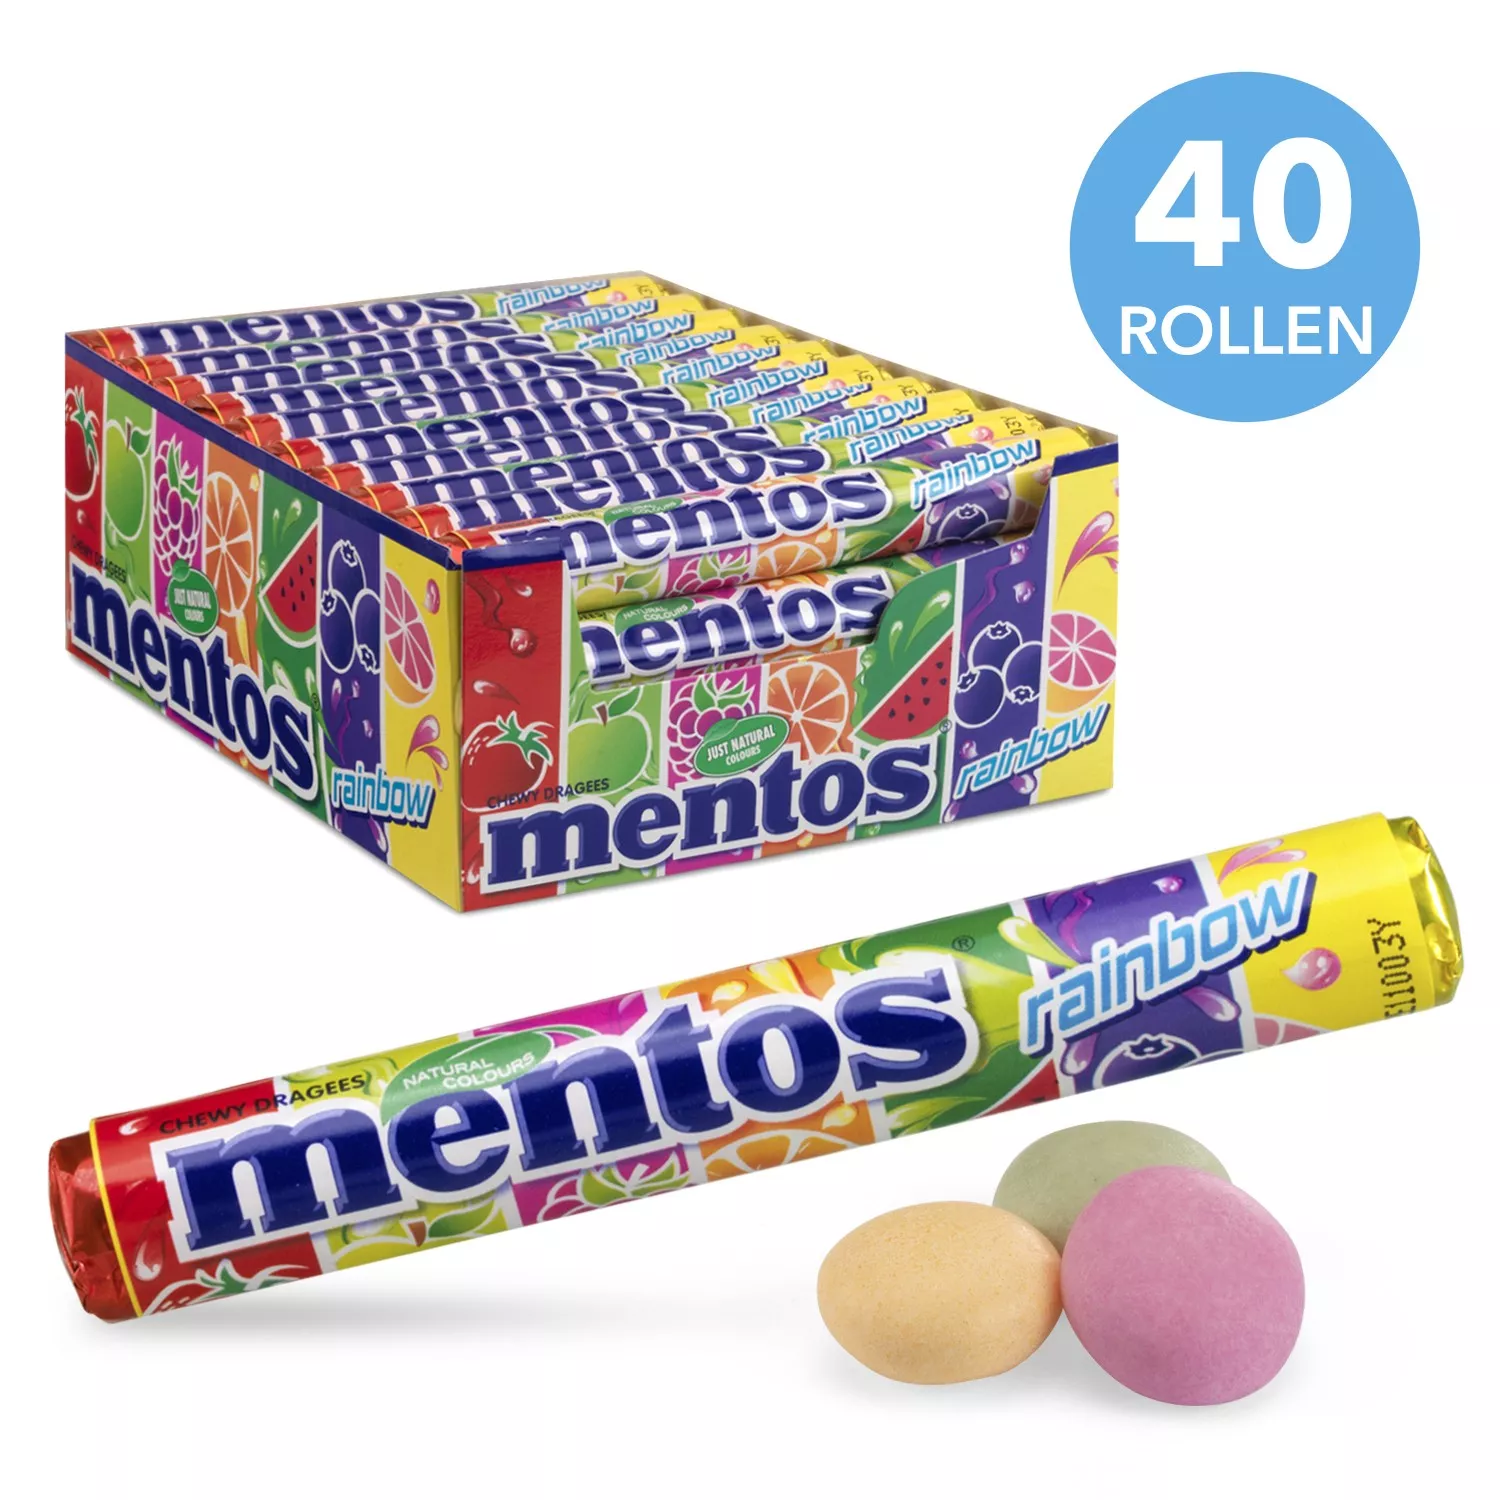 Mentos Rainbow (40 rolls) - Wholesale